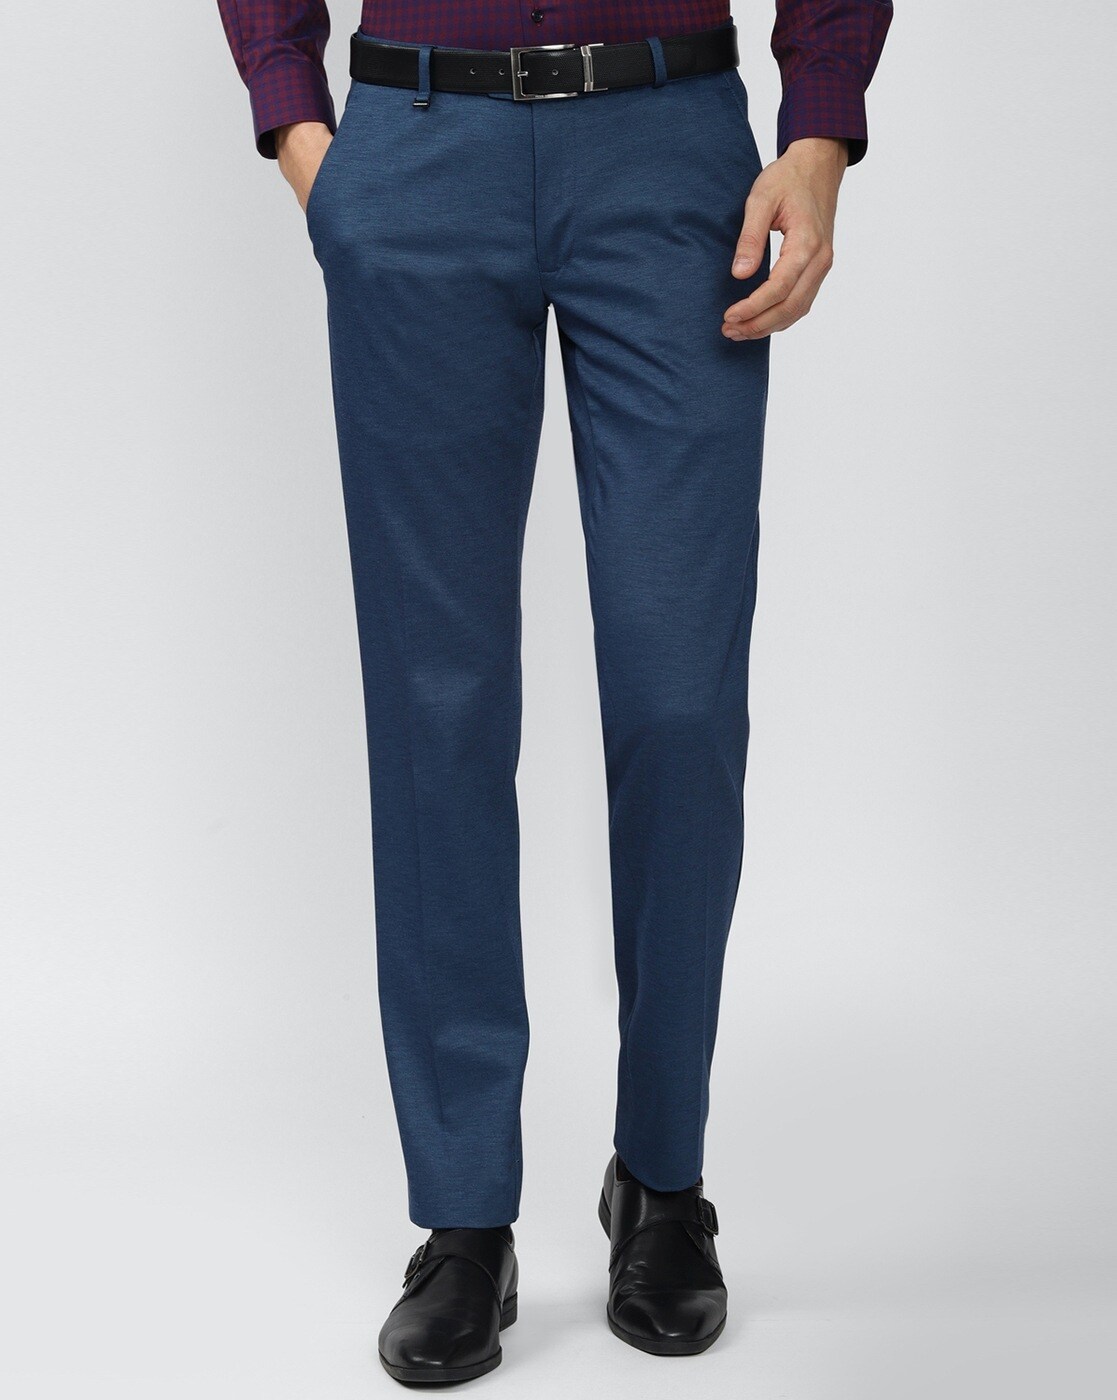 Buy Blue Trousers & Pants for Men by ARROW Online | Ajio.com